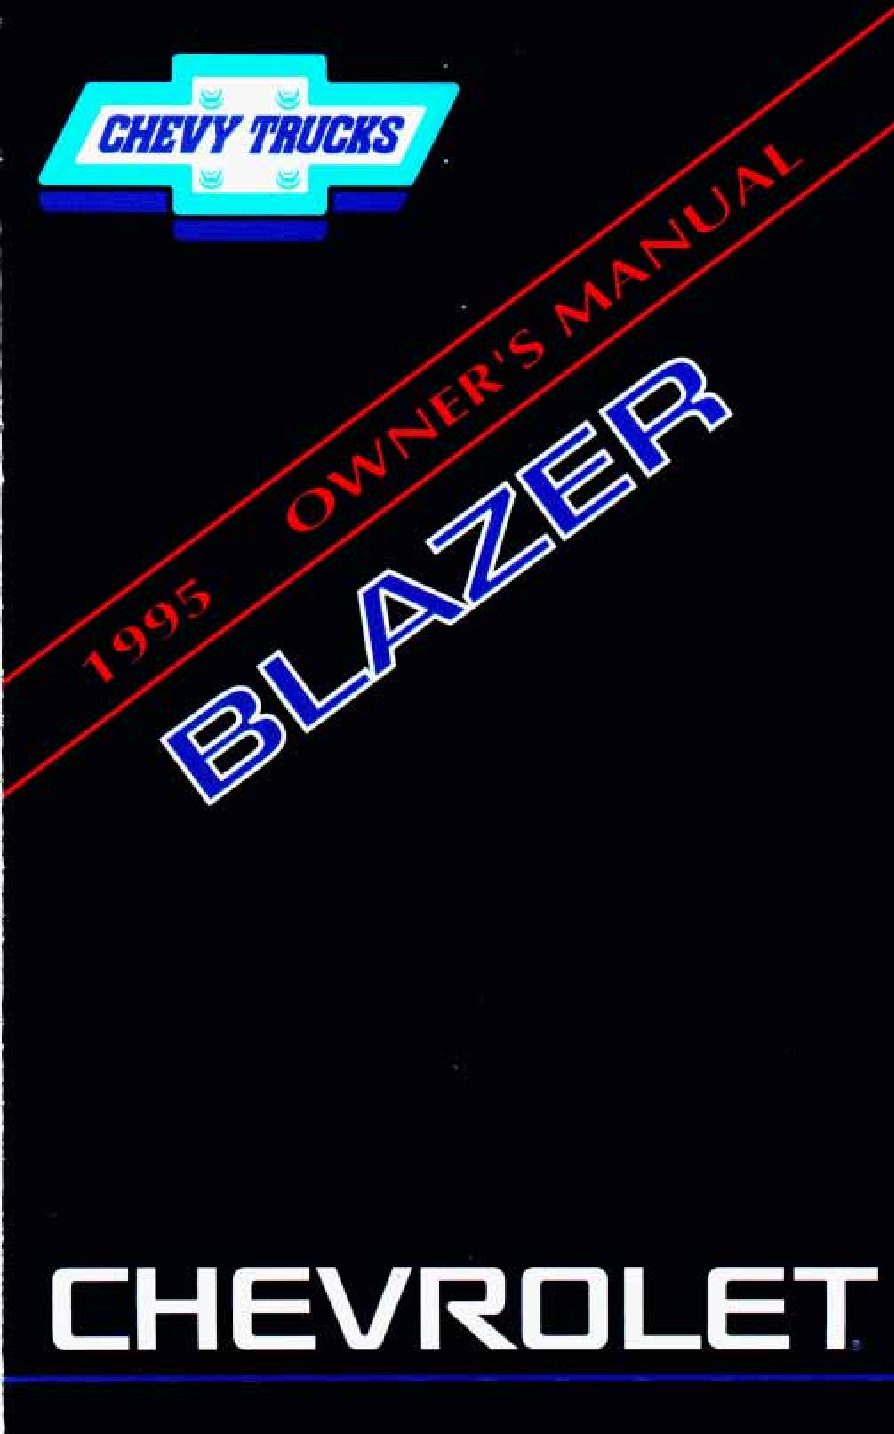 1995 Chevrolet Blazer owner’s manual Image